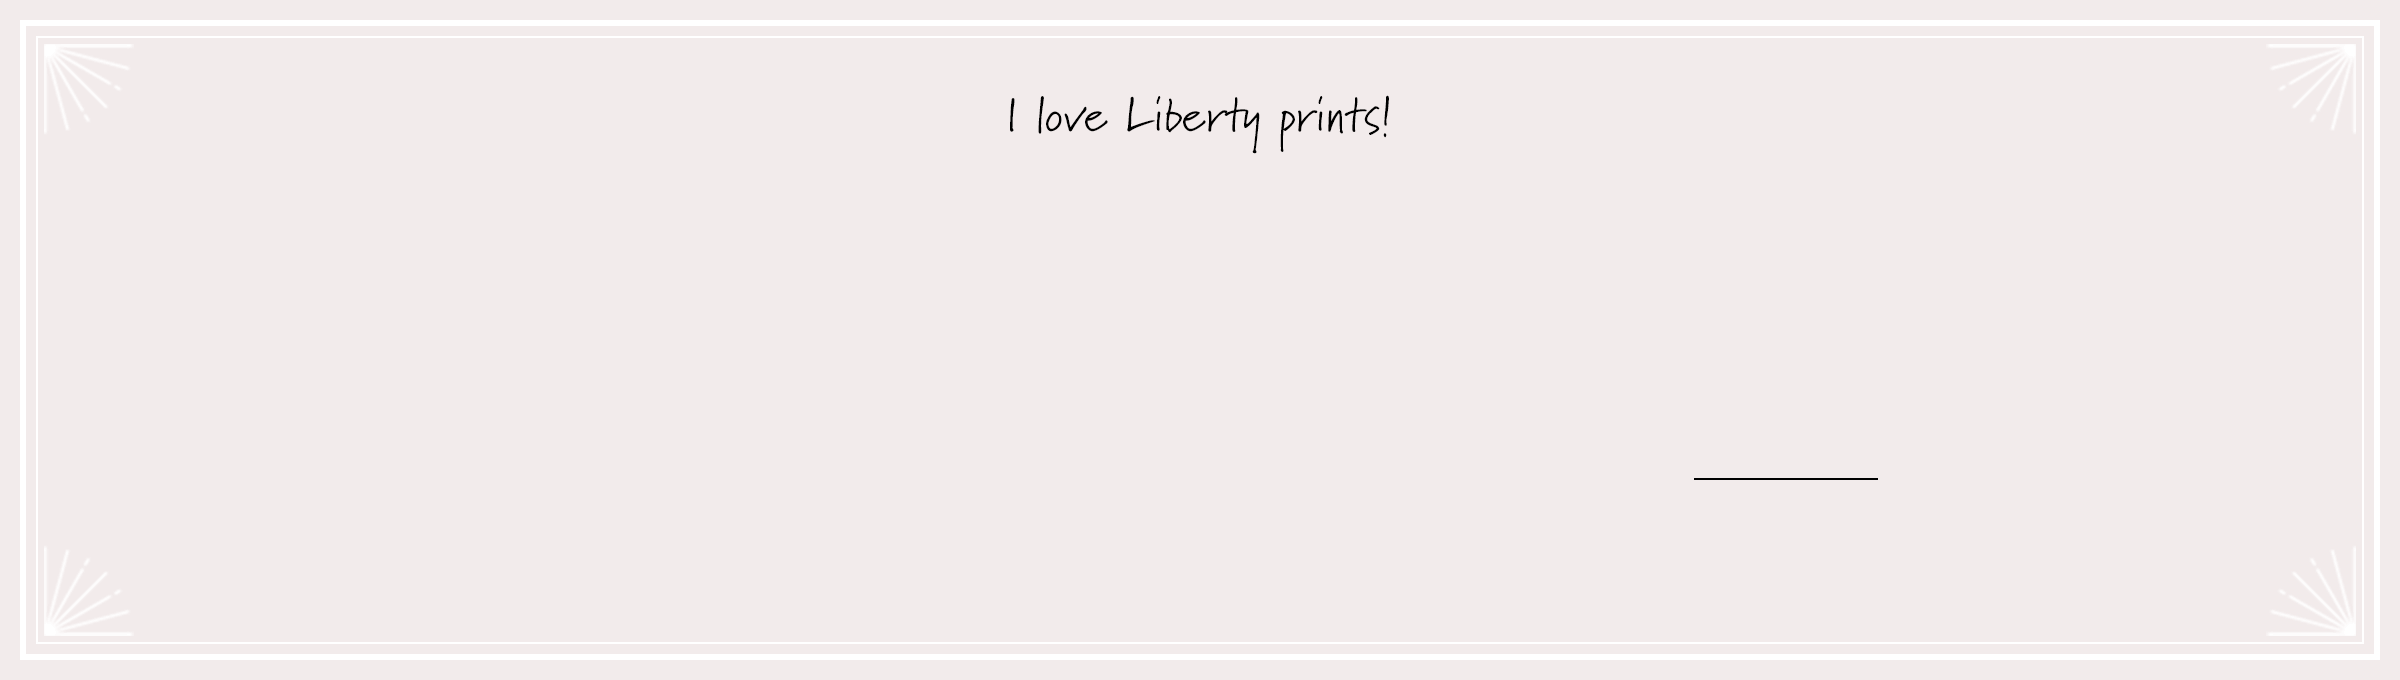 I love Liberty prints!